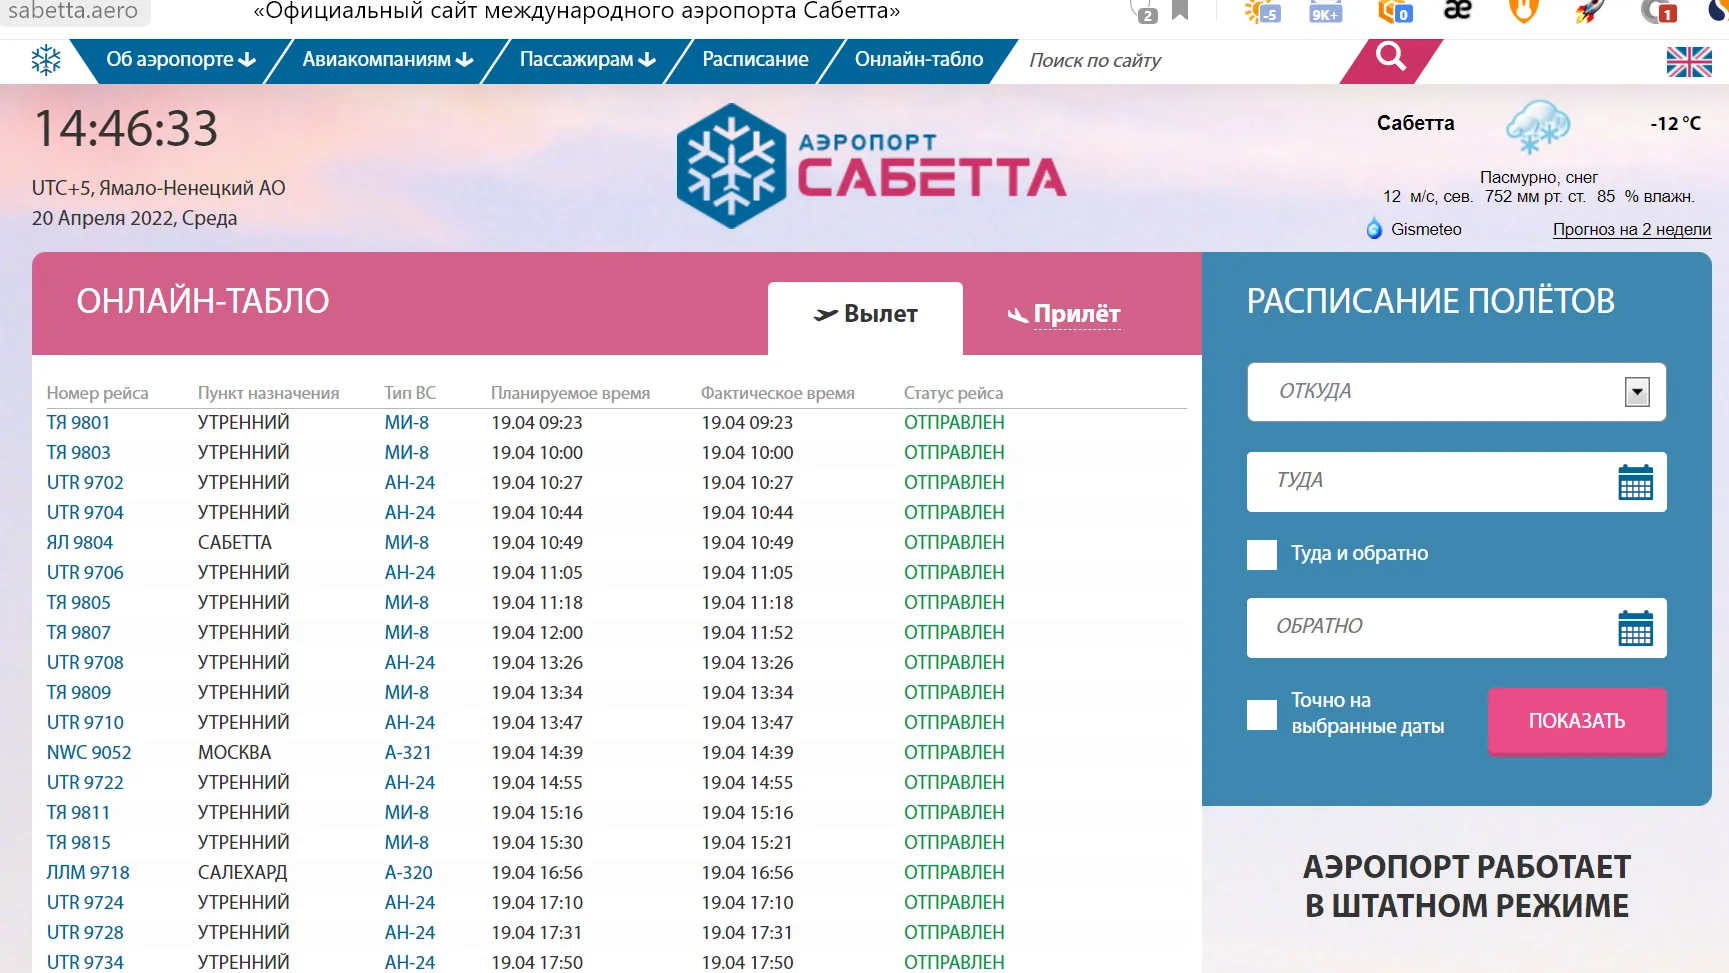 Так выглядит онлайн-табло аэропорта Сабетта. Источник: sabetta.aero/sabetta